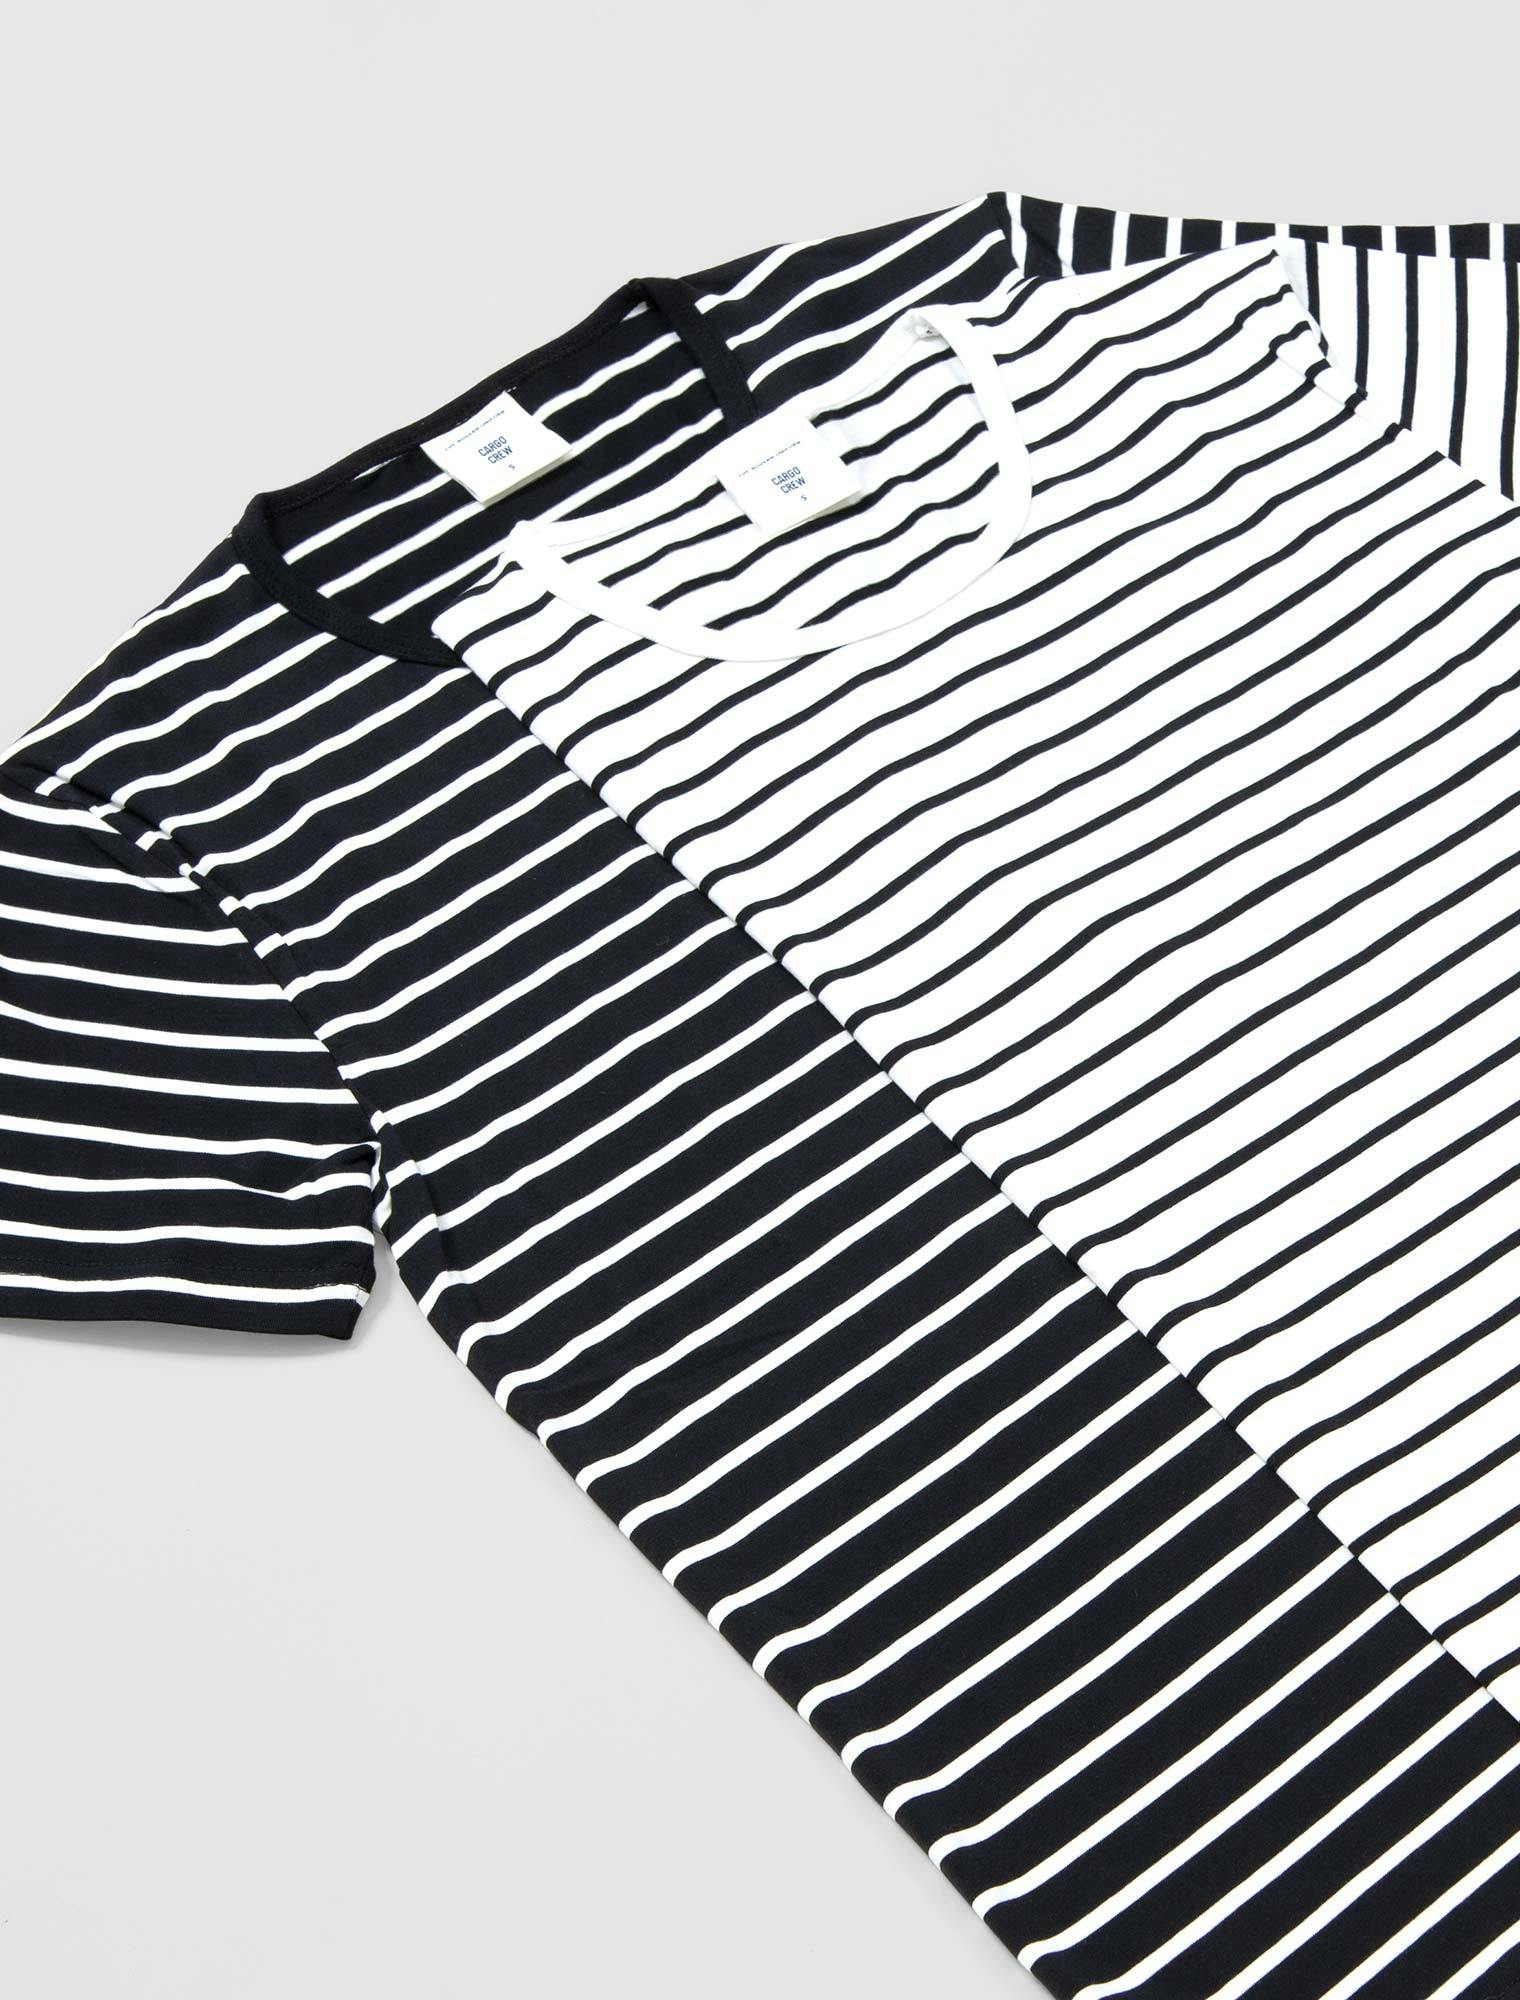 Men's Riviera Striped T-Shirt - Black & White Stripe